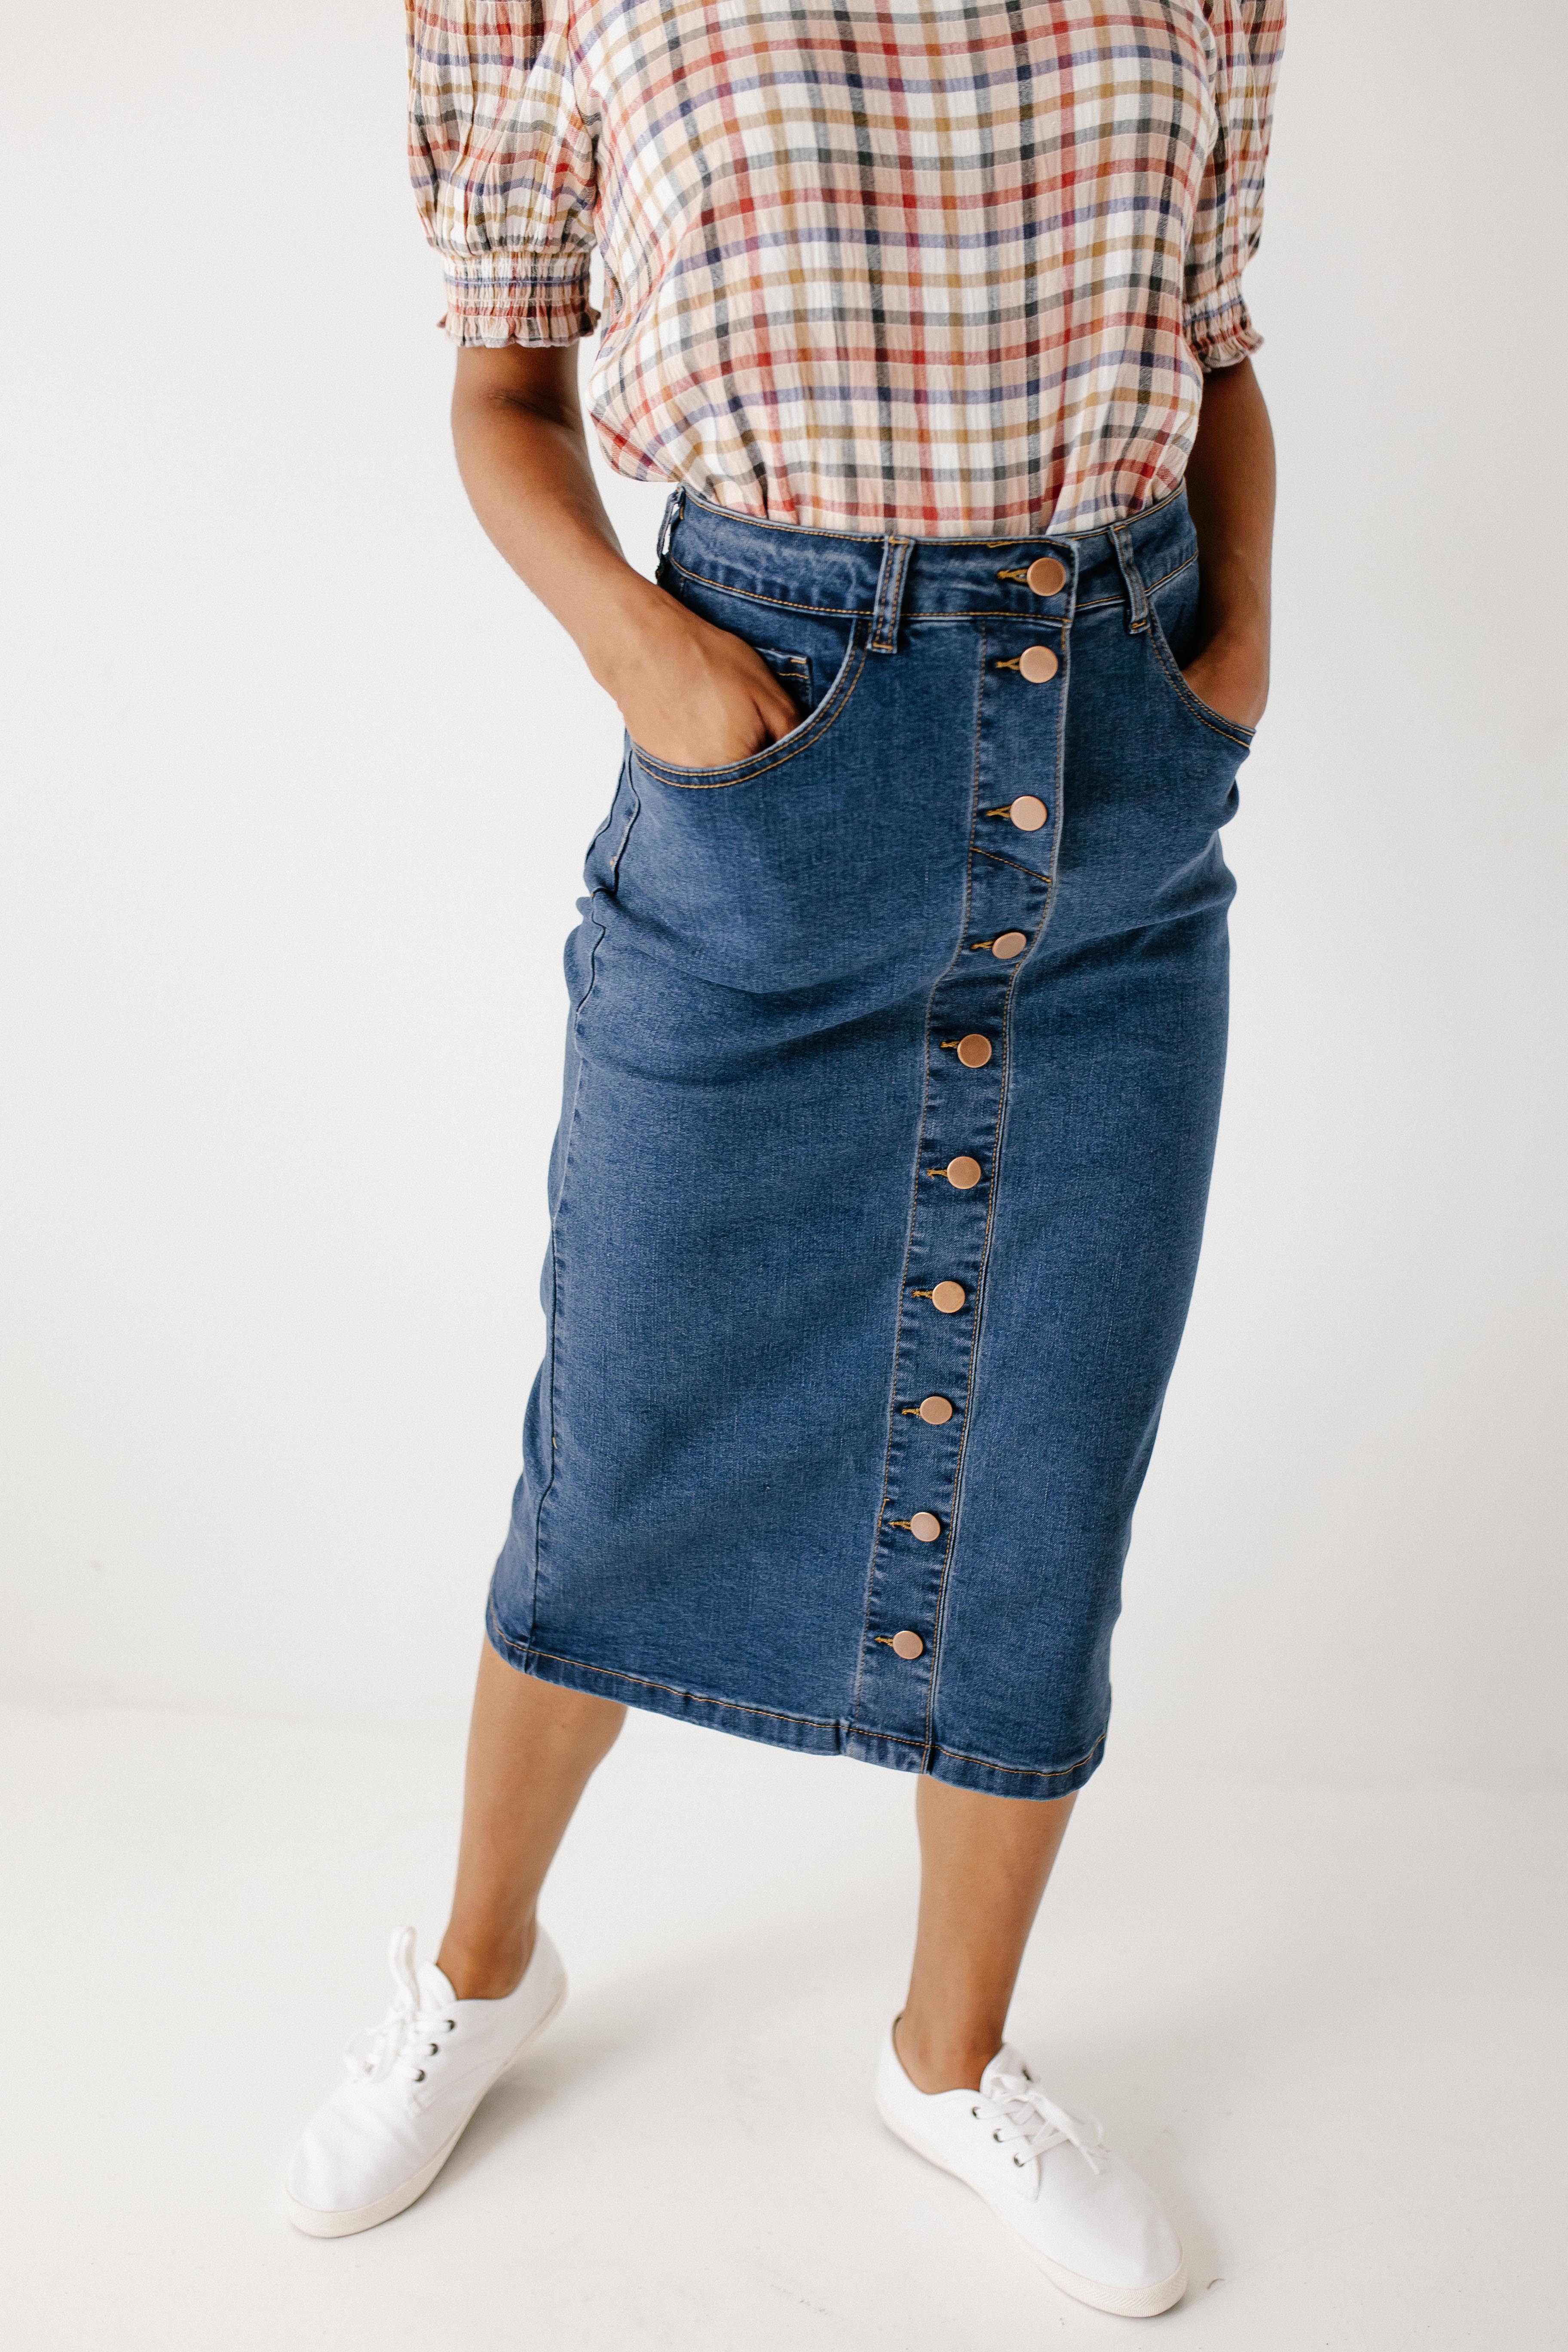 Isabel Marant 'Odell' Front Button Up Denim Skirt